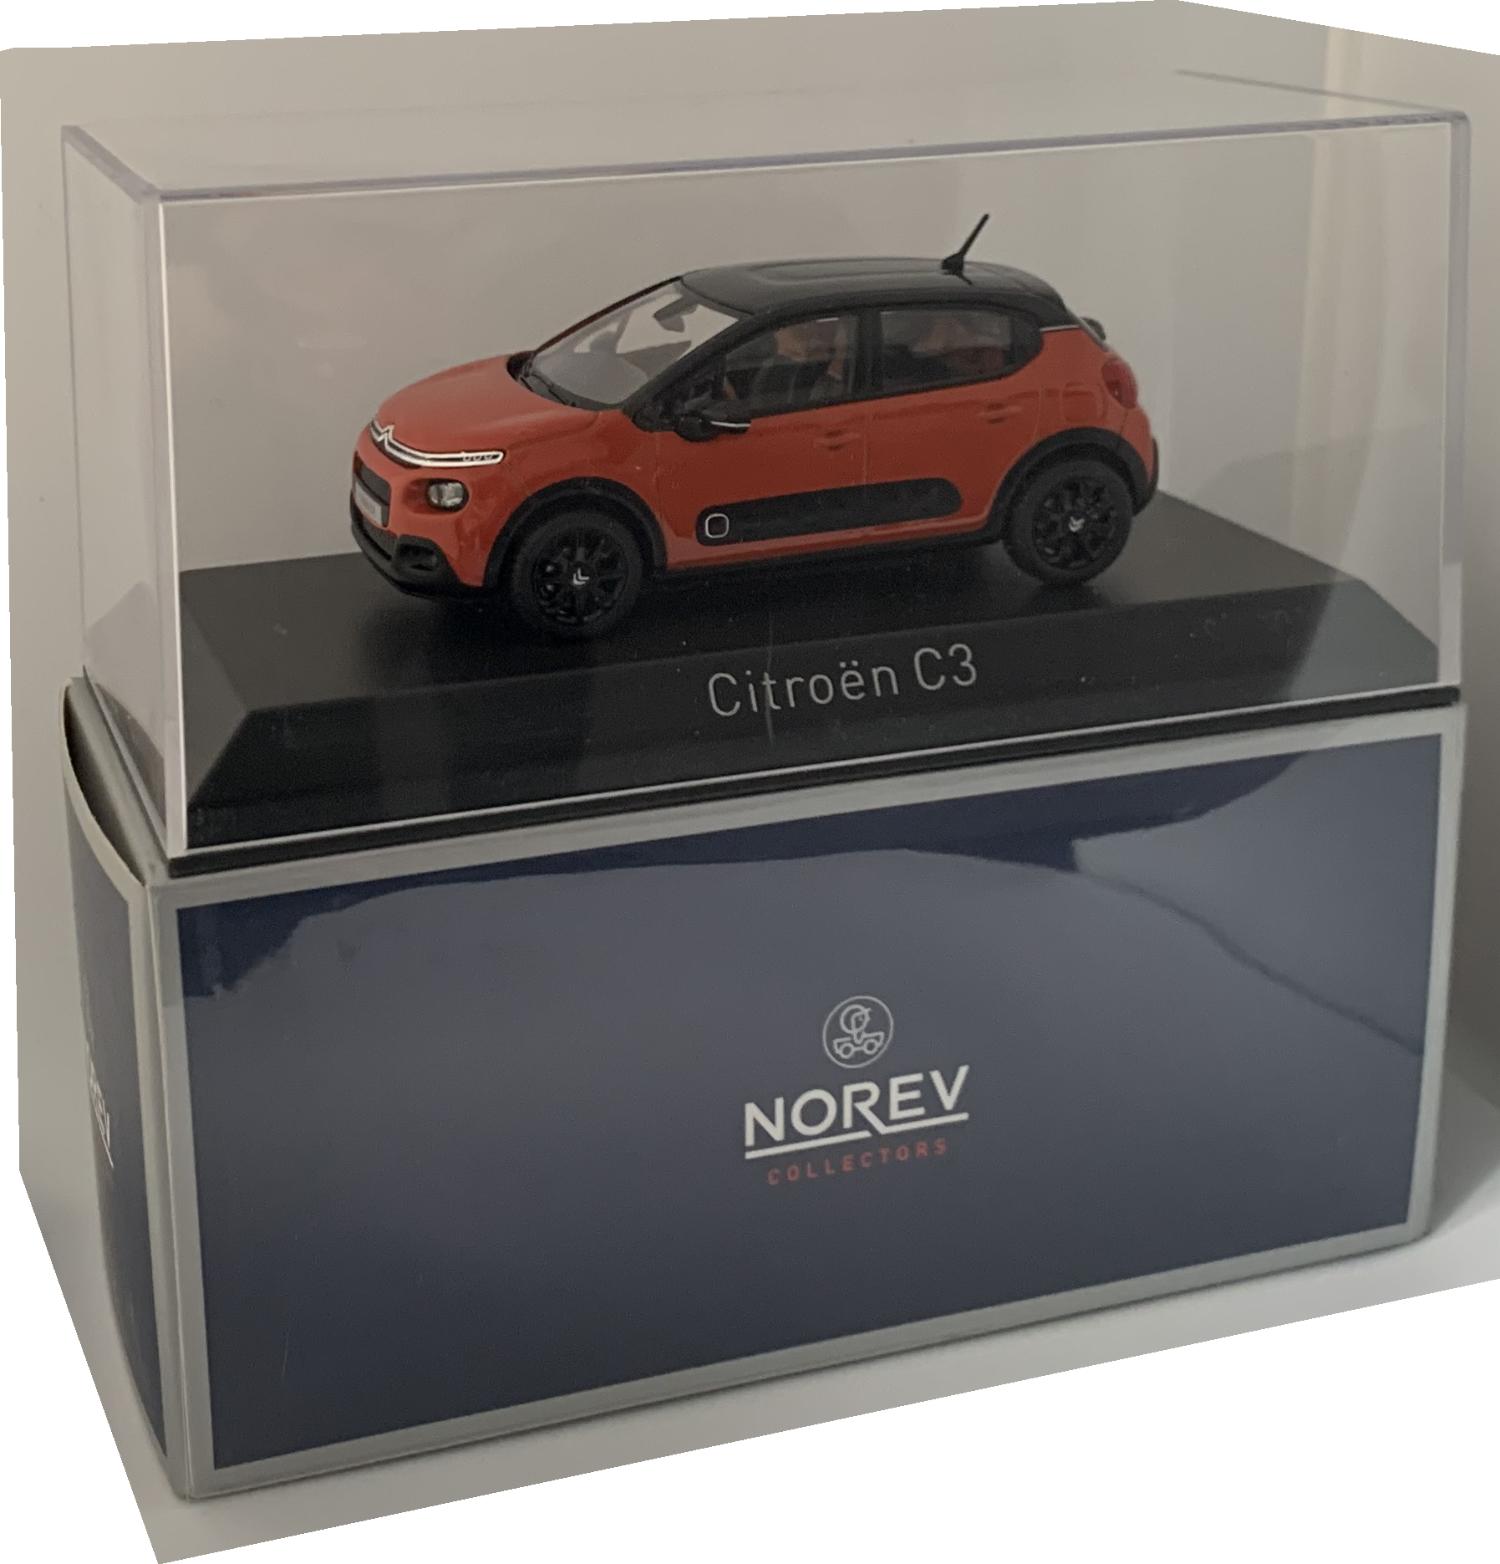 Citroen C3 2016 in power orange 1:43 scale model from Norev